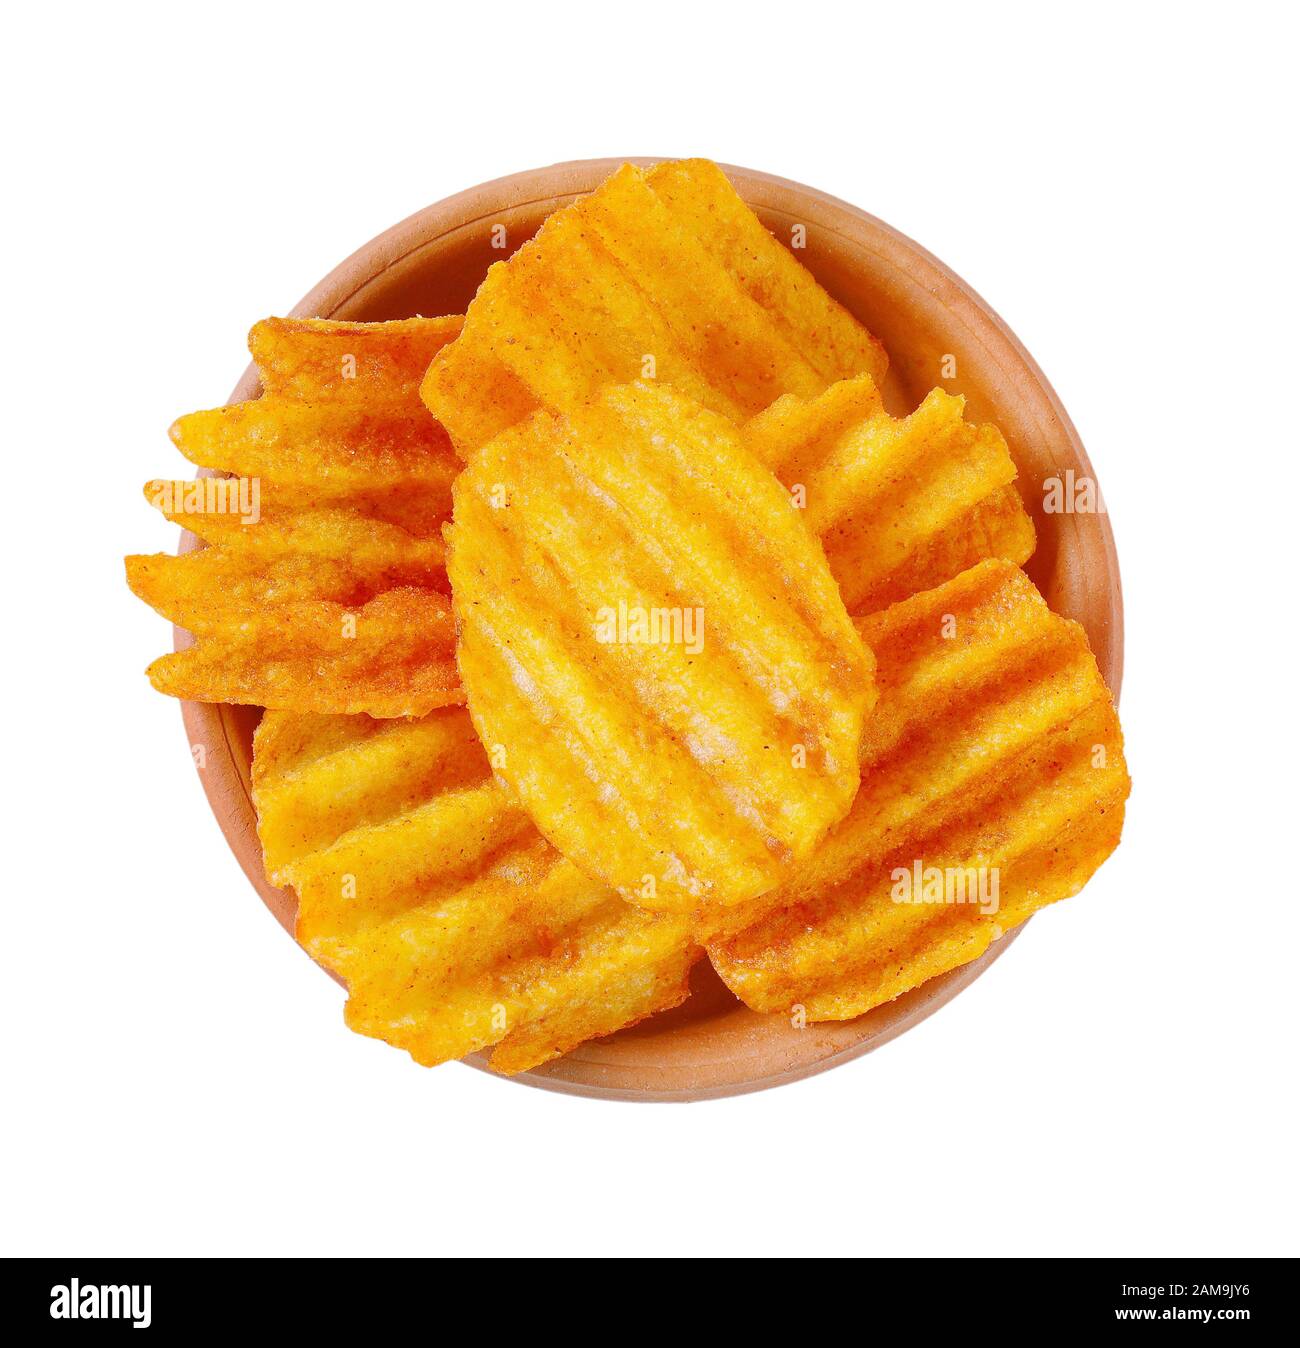 bowl of fried potato chips on white background Stock Photo